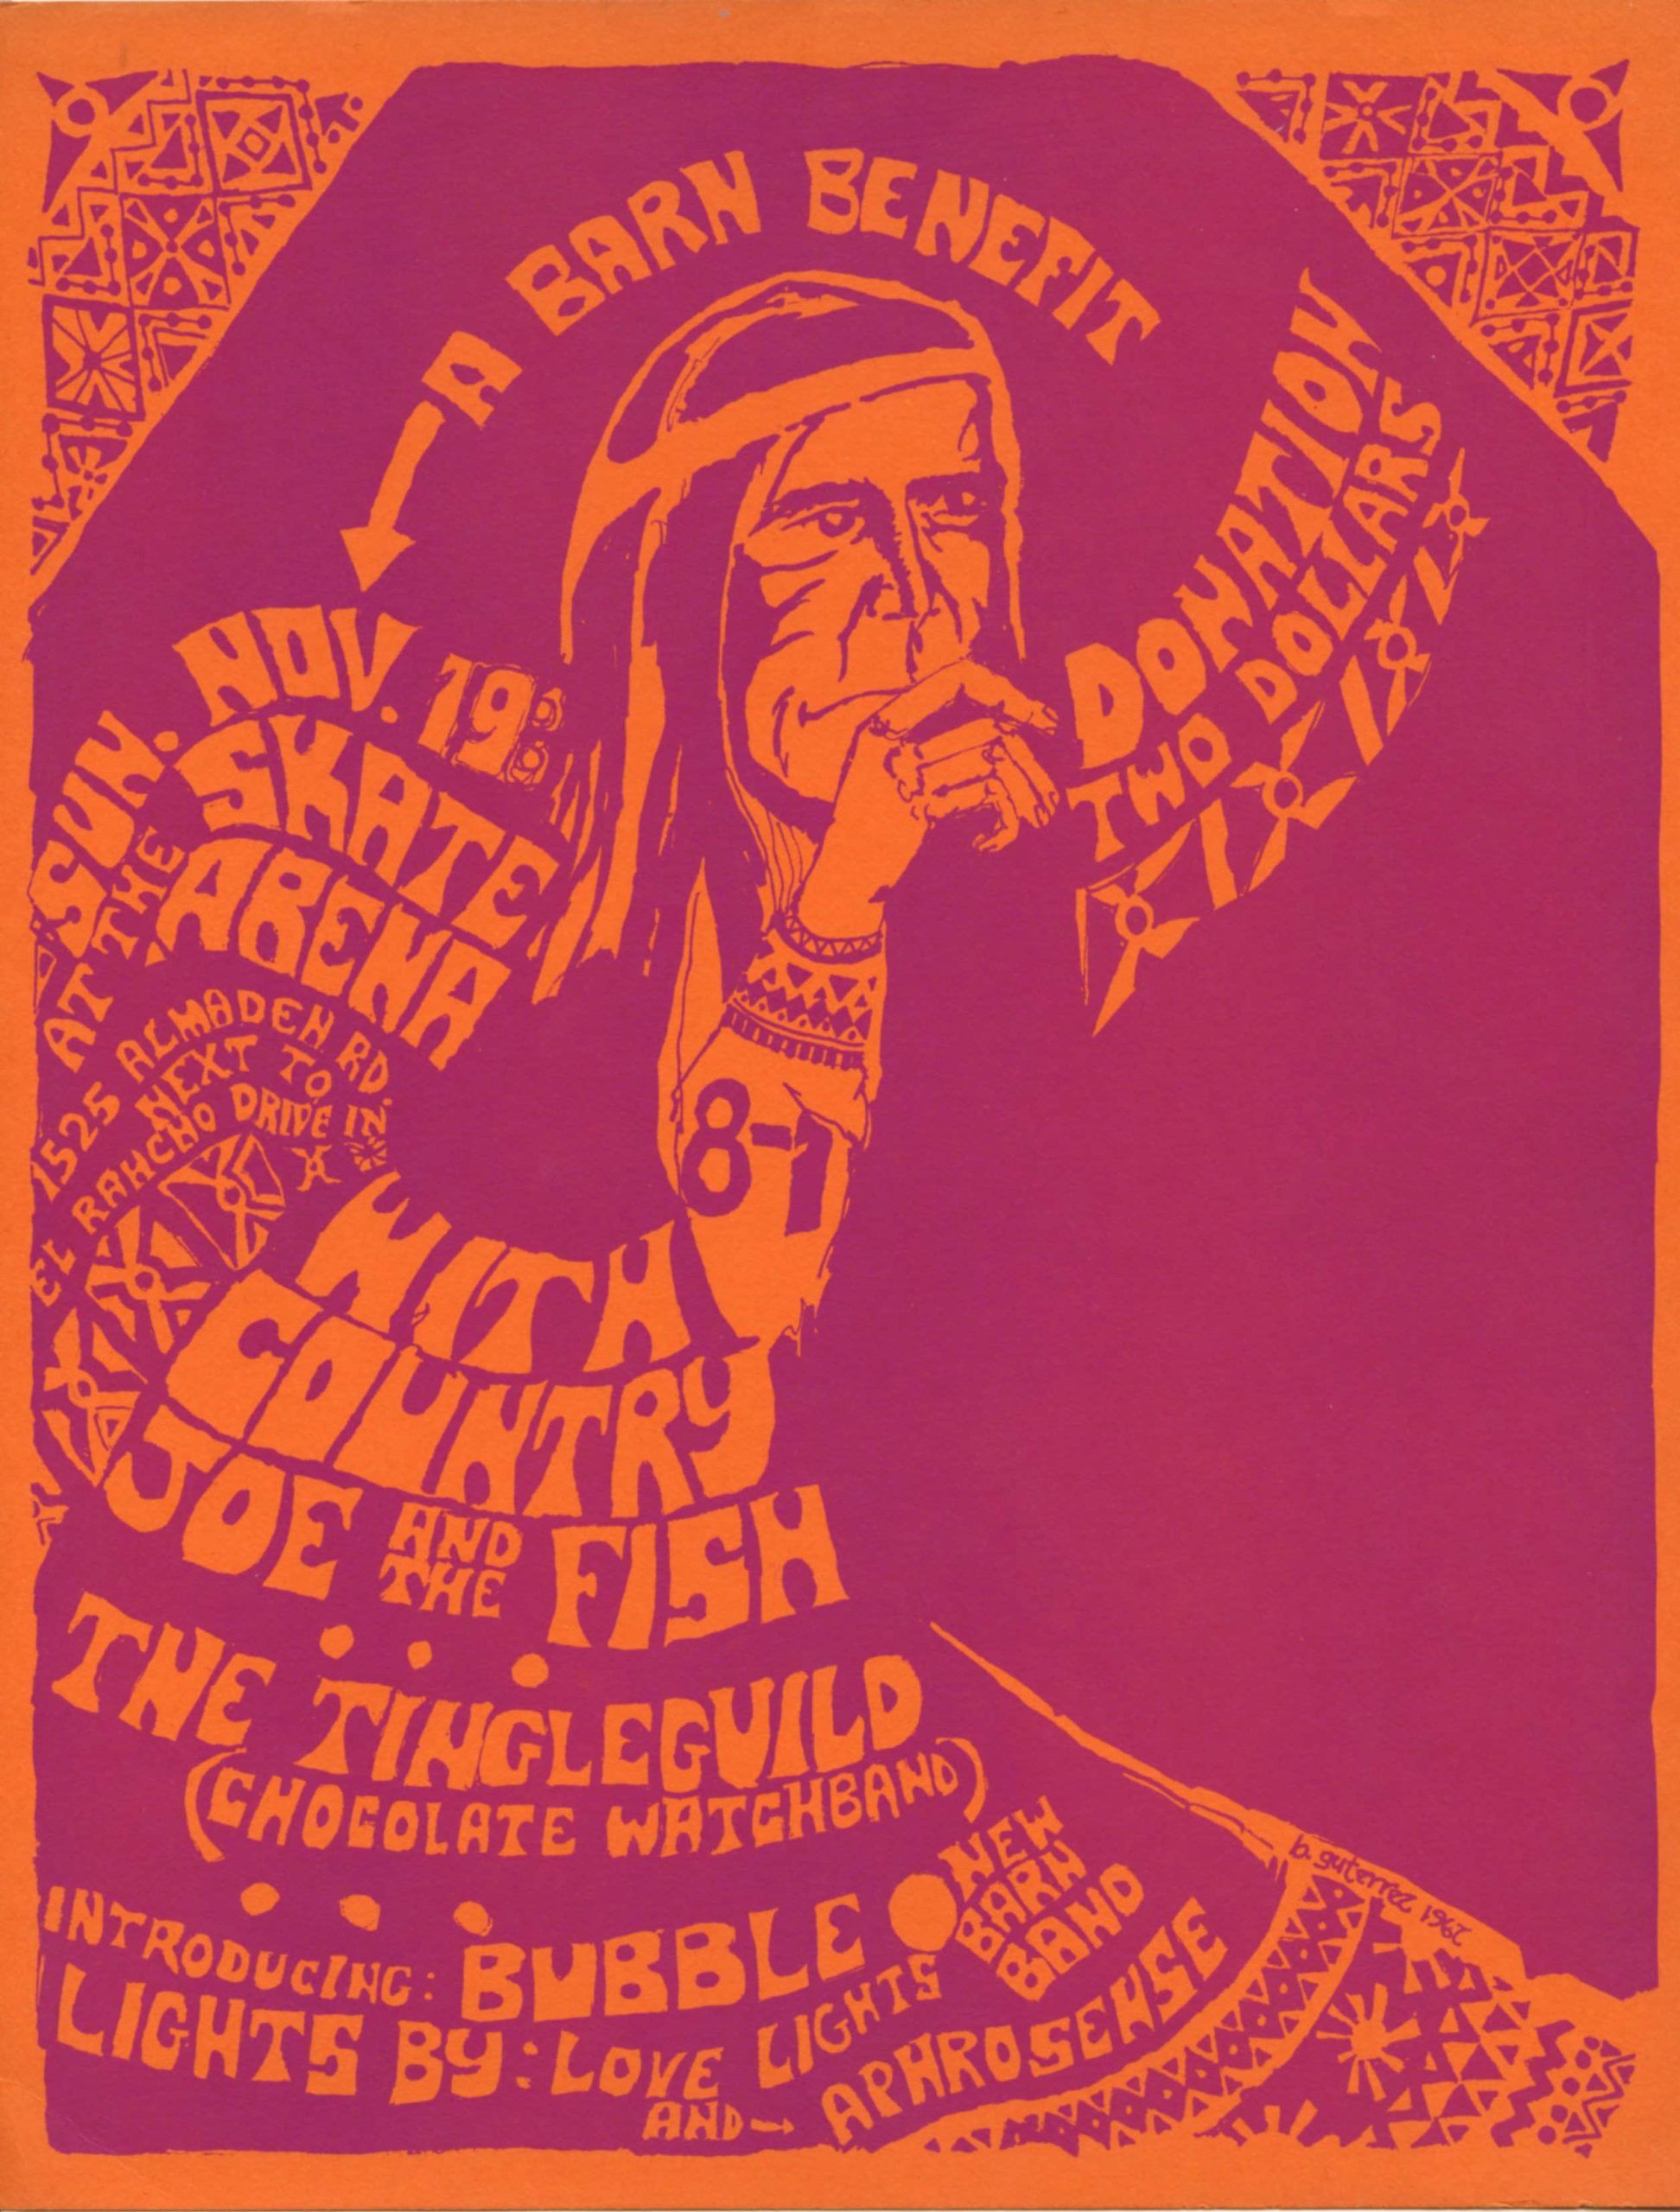 Country Joe and The Fish Handbill 1967 Nov 19 The Skate Arena San Jose